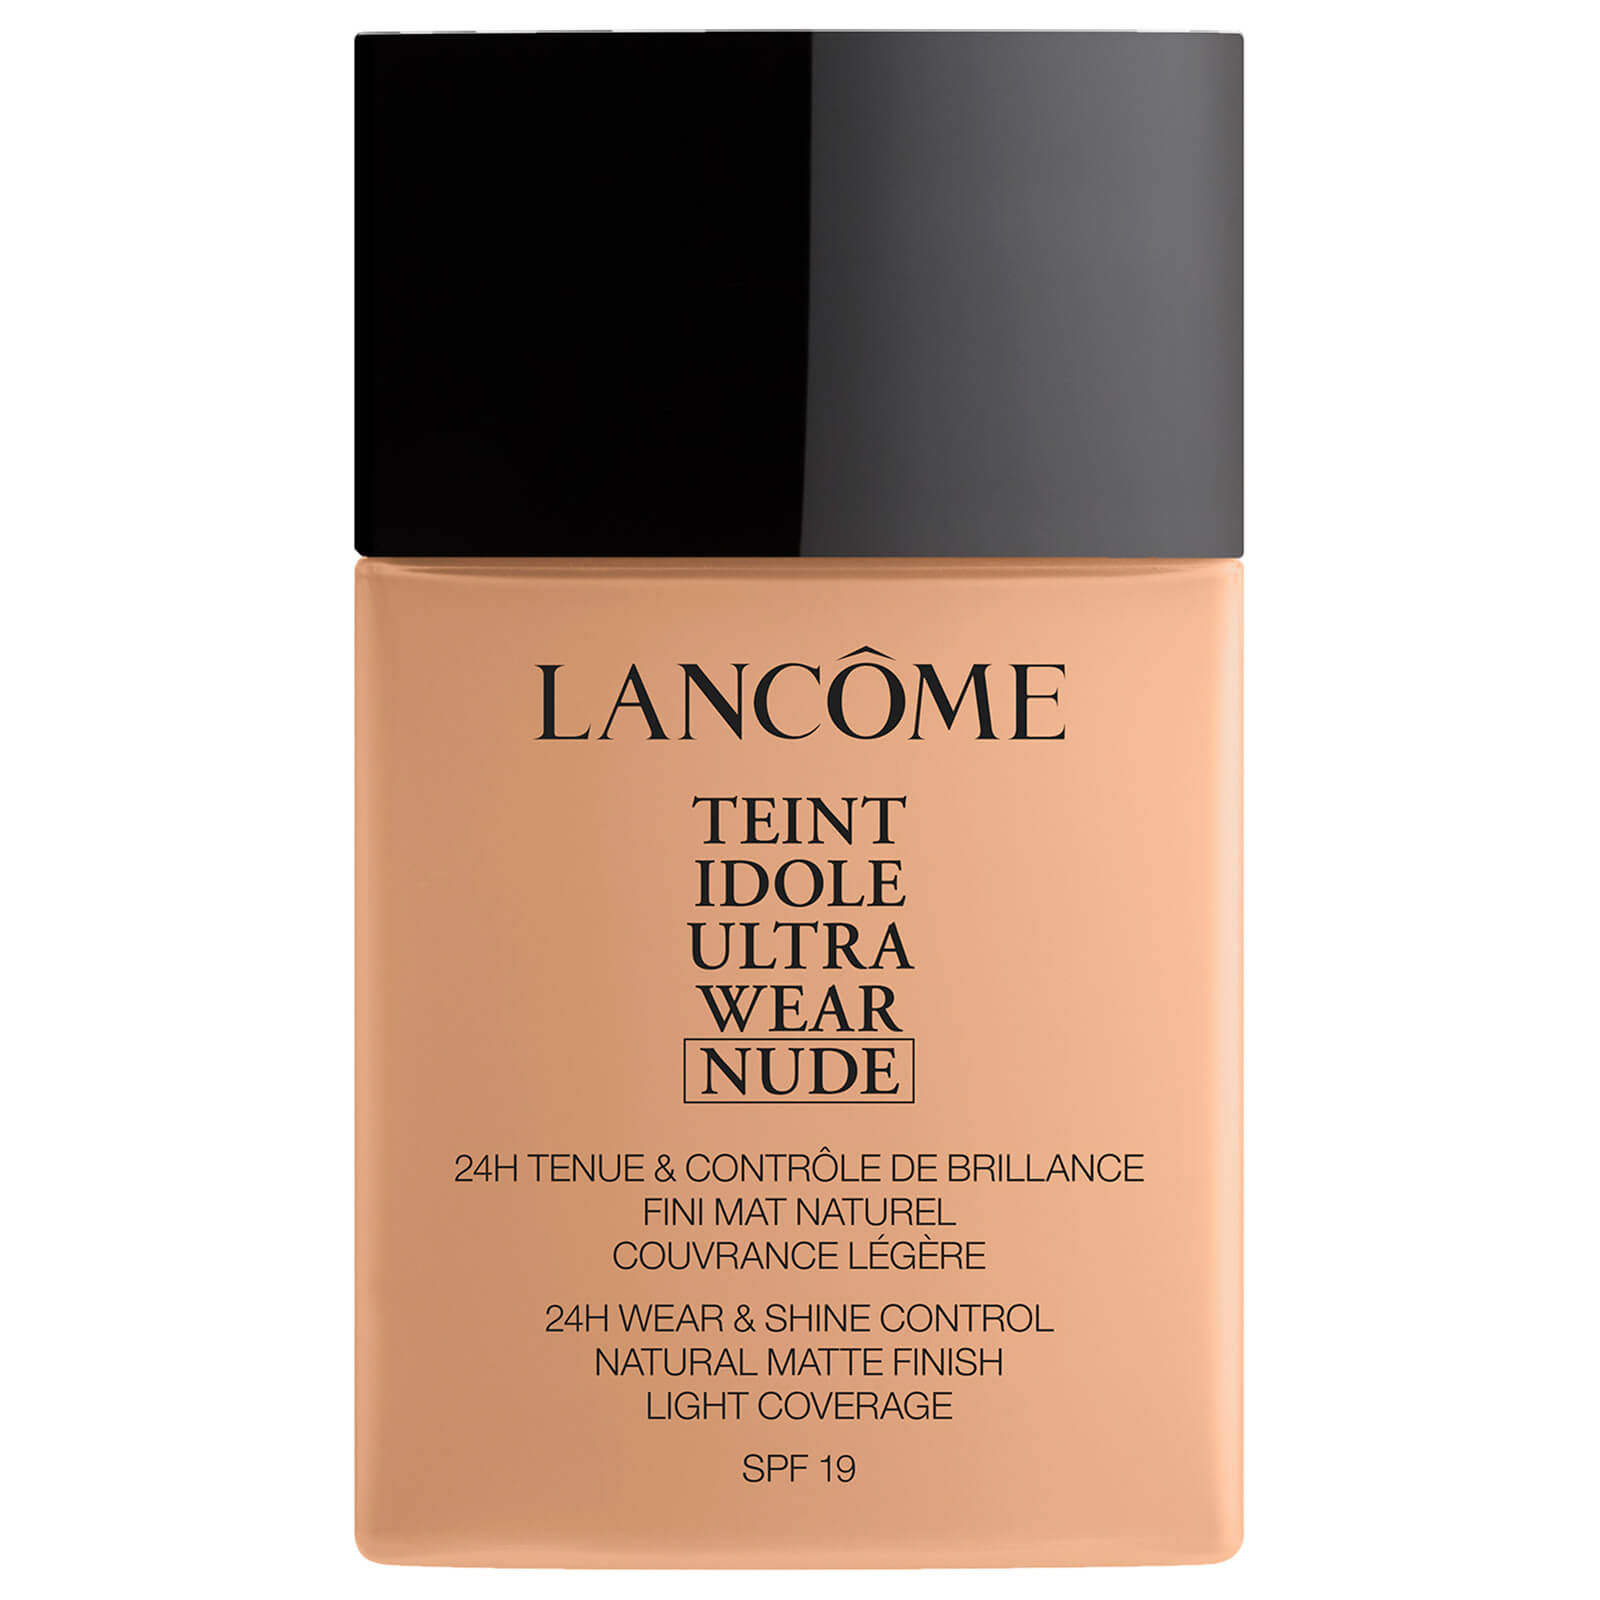 Lancôme Teint Idole Ultra Wear Nude Foundation 40ml (Various Shades) - 04 Beige Nature